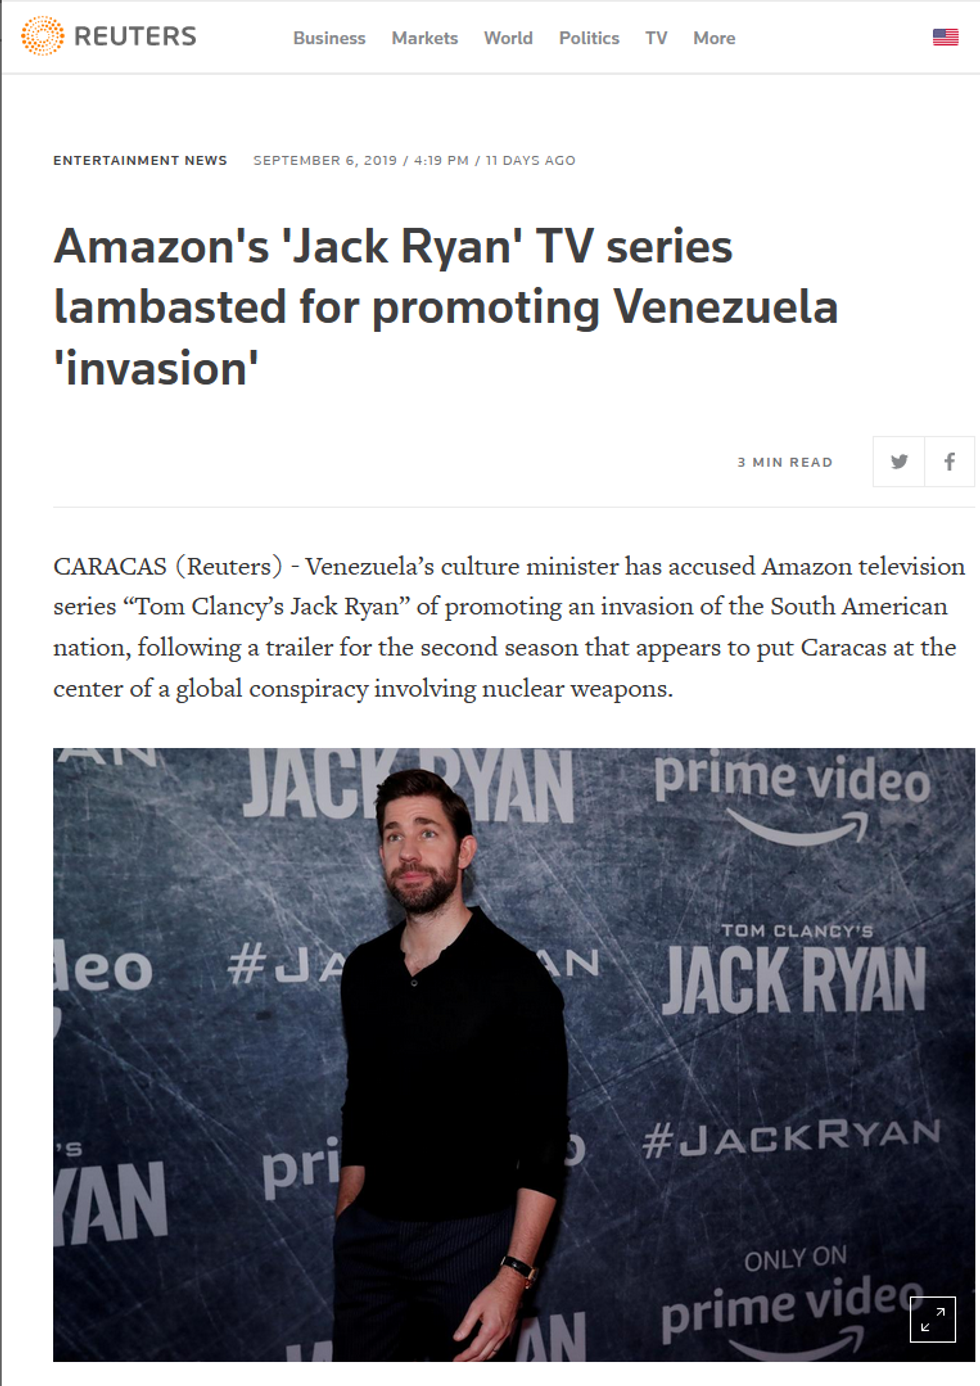 Reuters: Amazon's 'Jack Ryan' TV series lambasted for promoting Venezuela 'invasion'